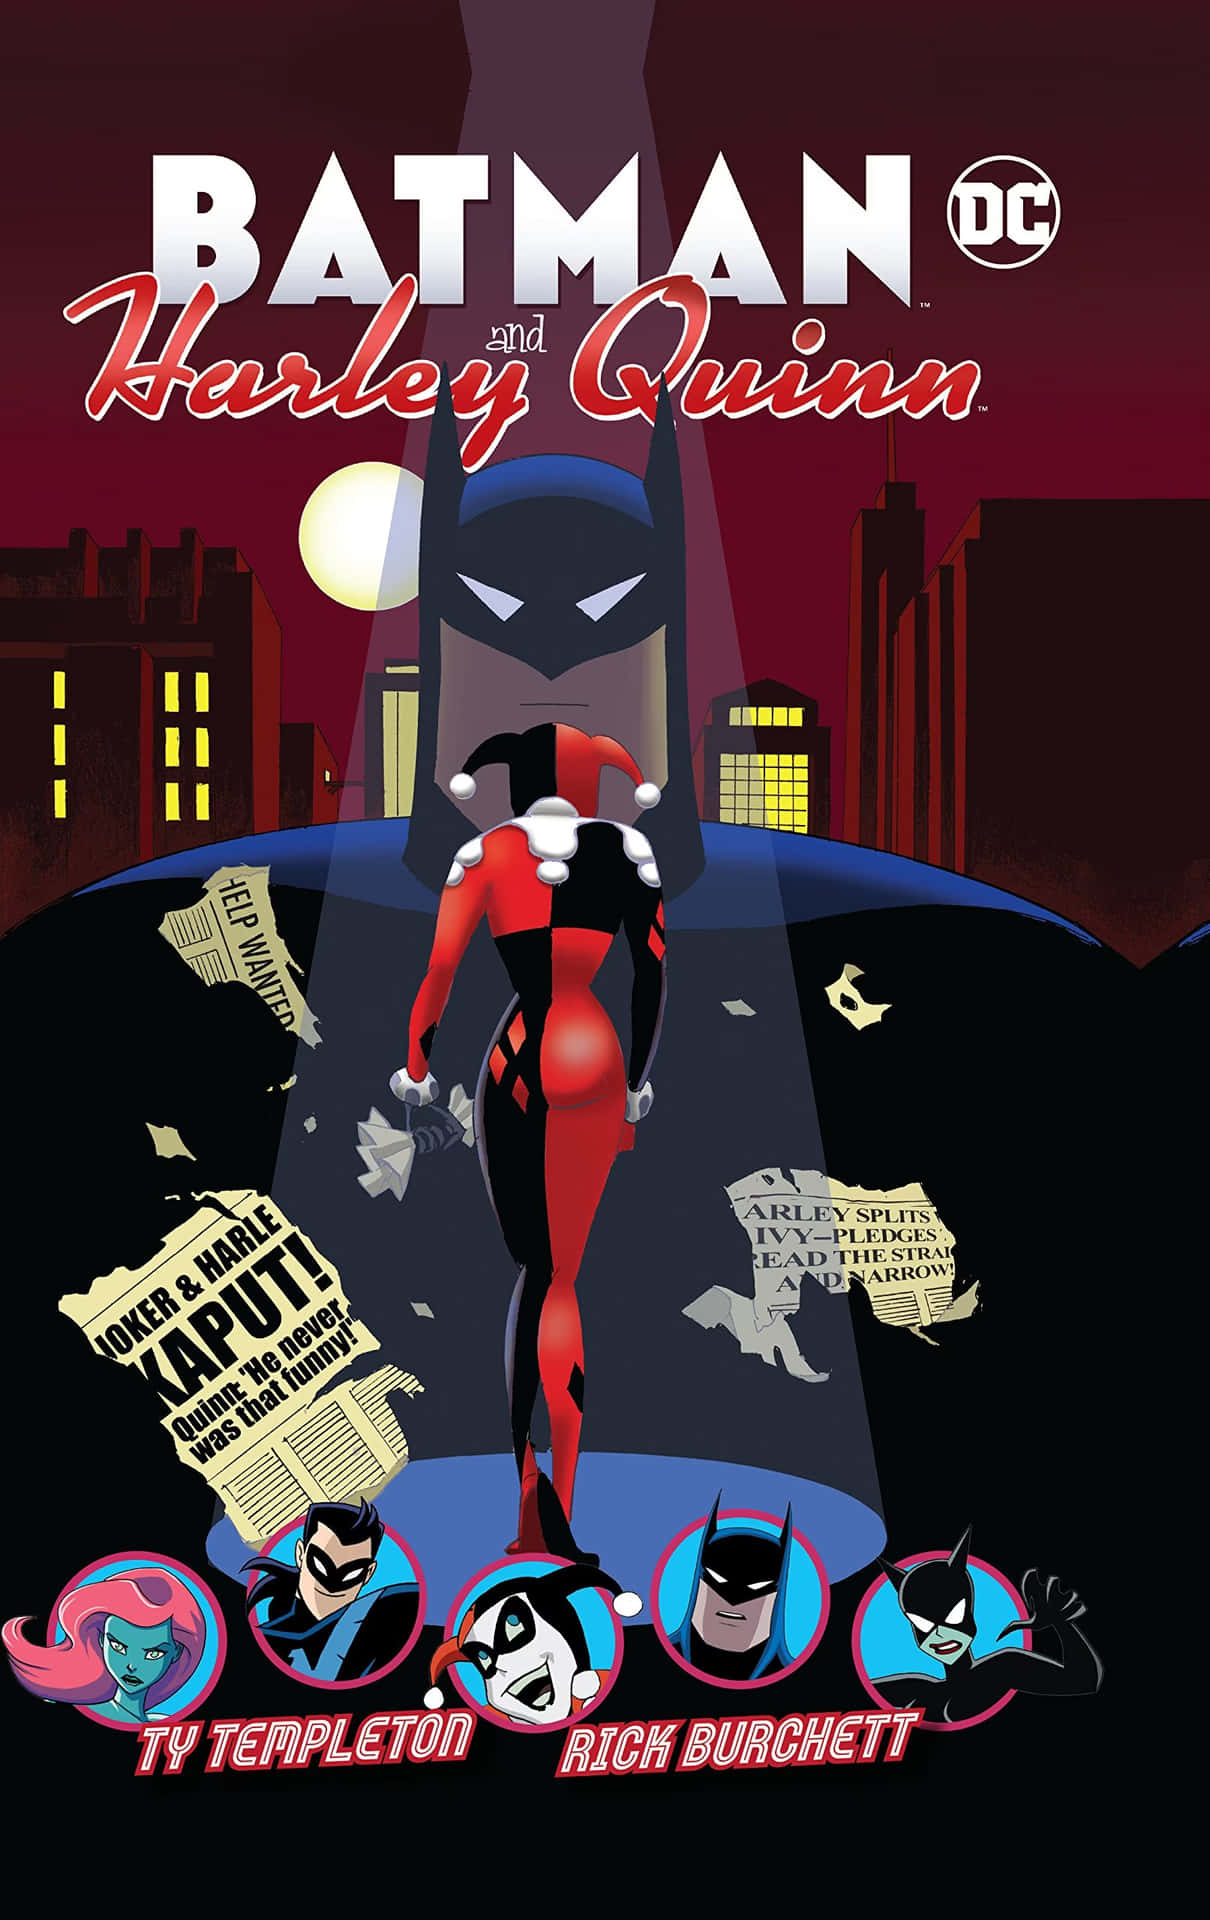 Batman and Harley Quinn Face Off in a Stunning Artwork Wallpaper